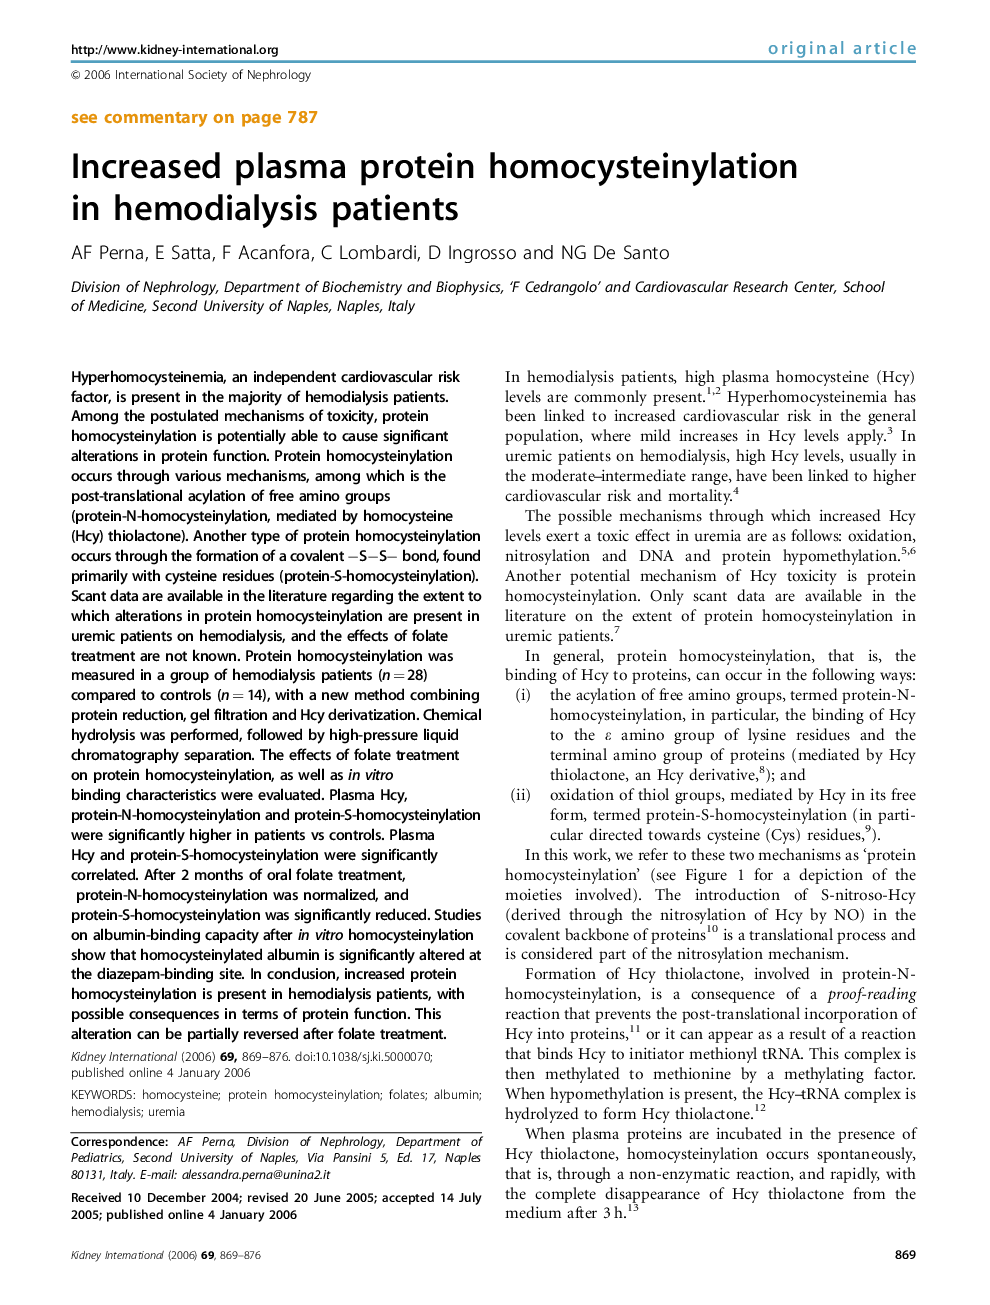 Increased plasma protein homocysteinylation in hemodialysis patients